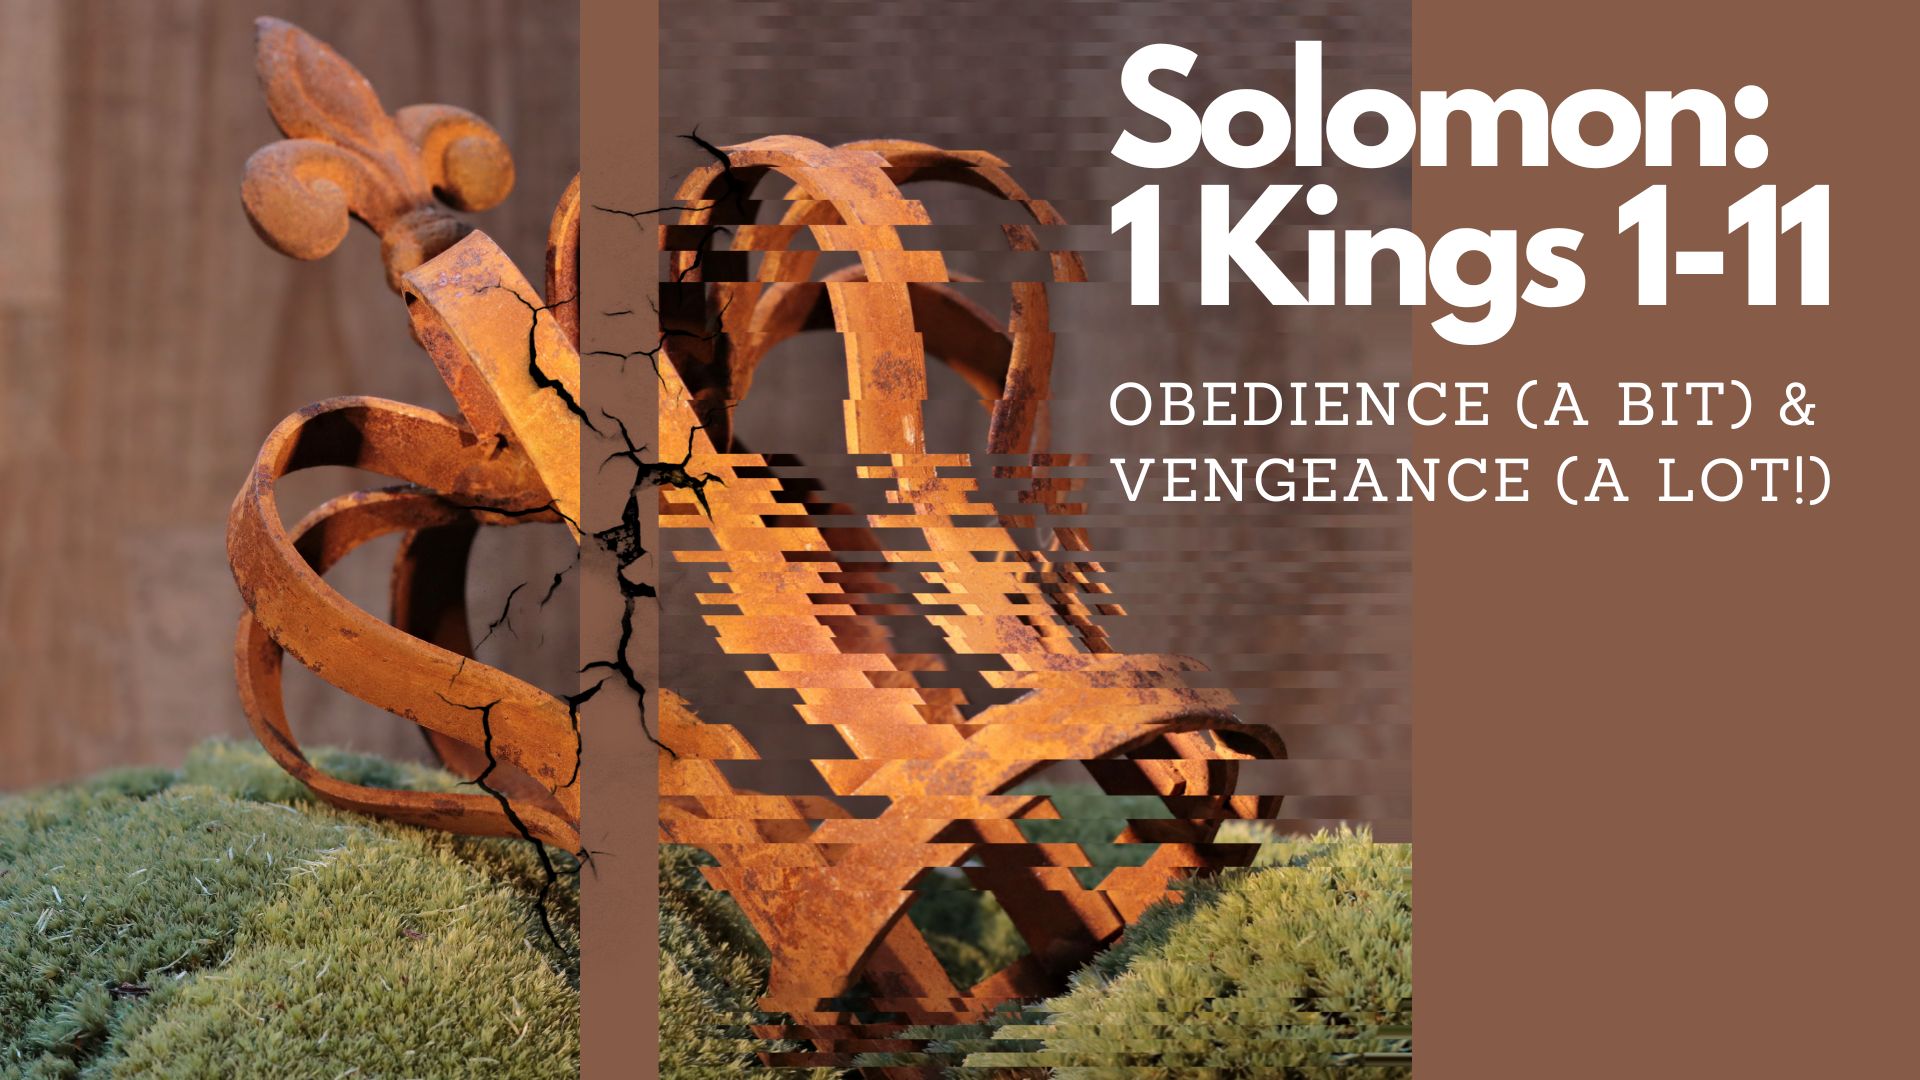 Obedience & Vengeance